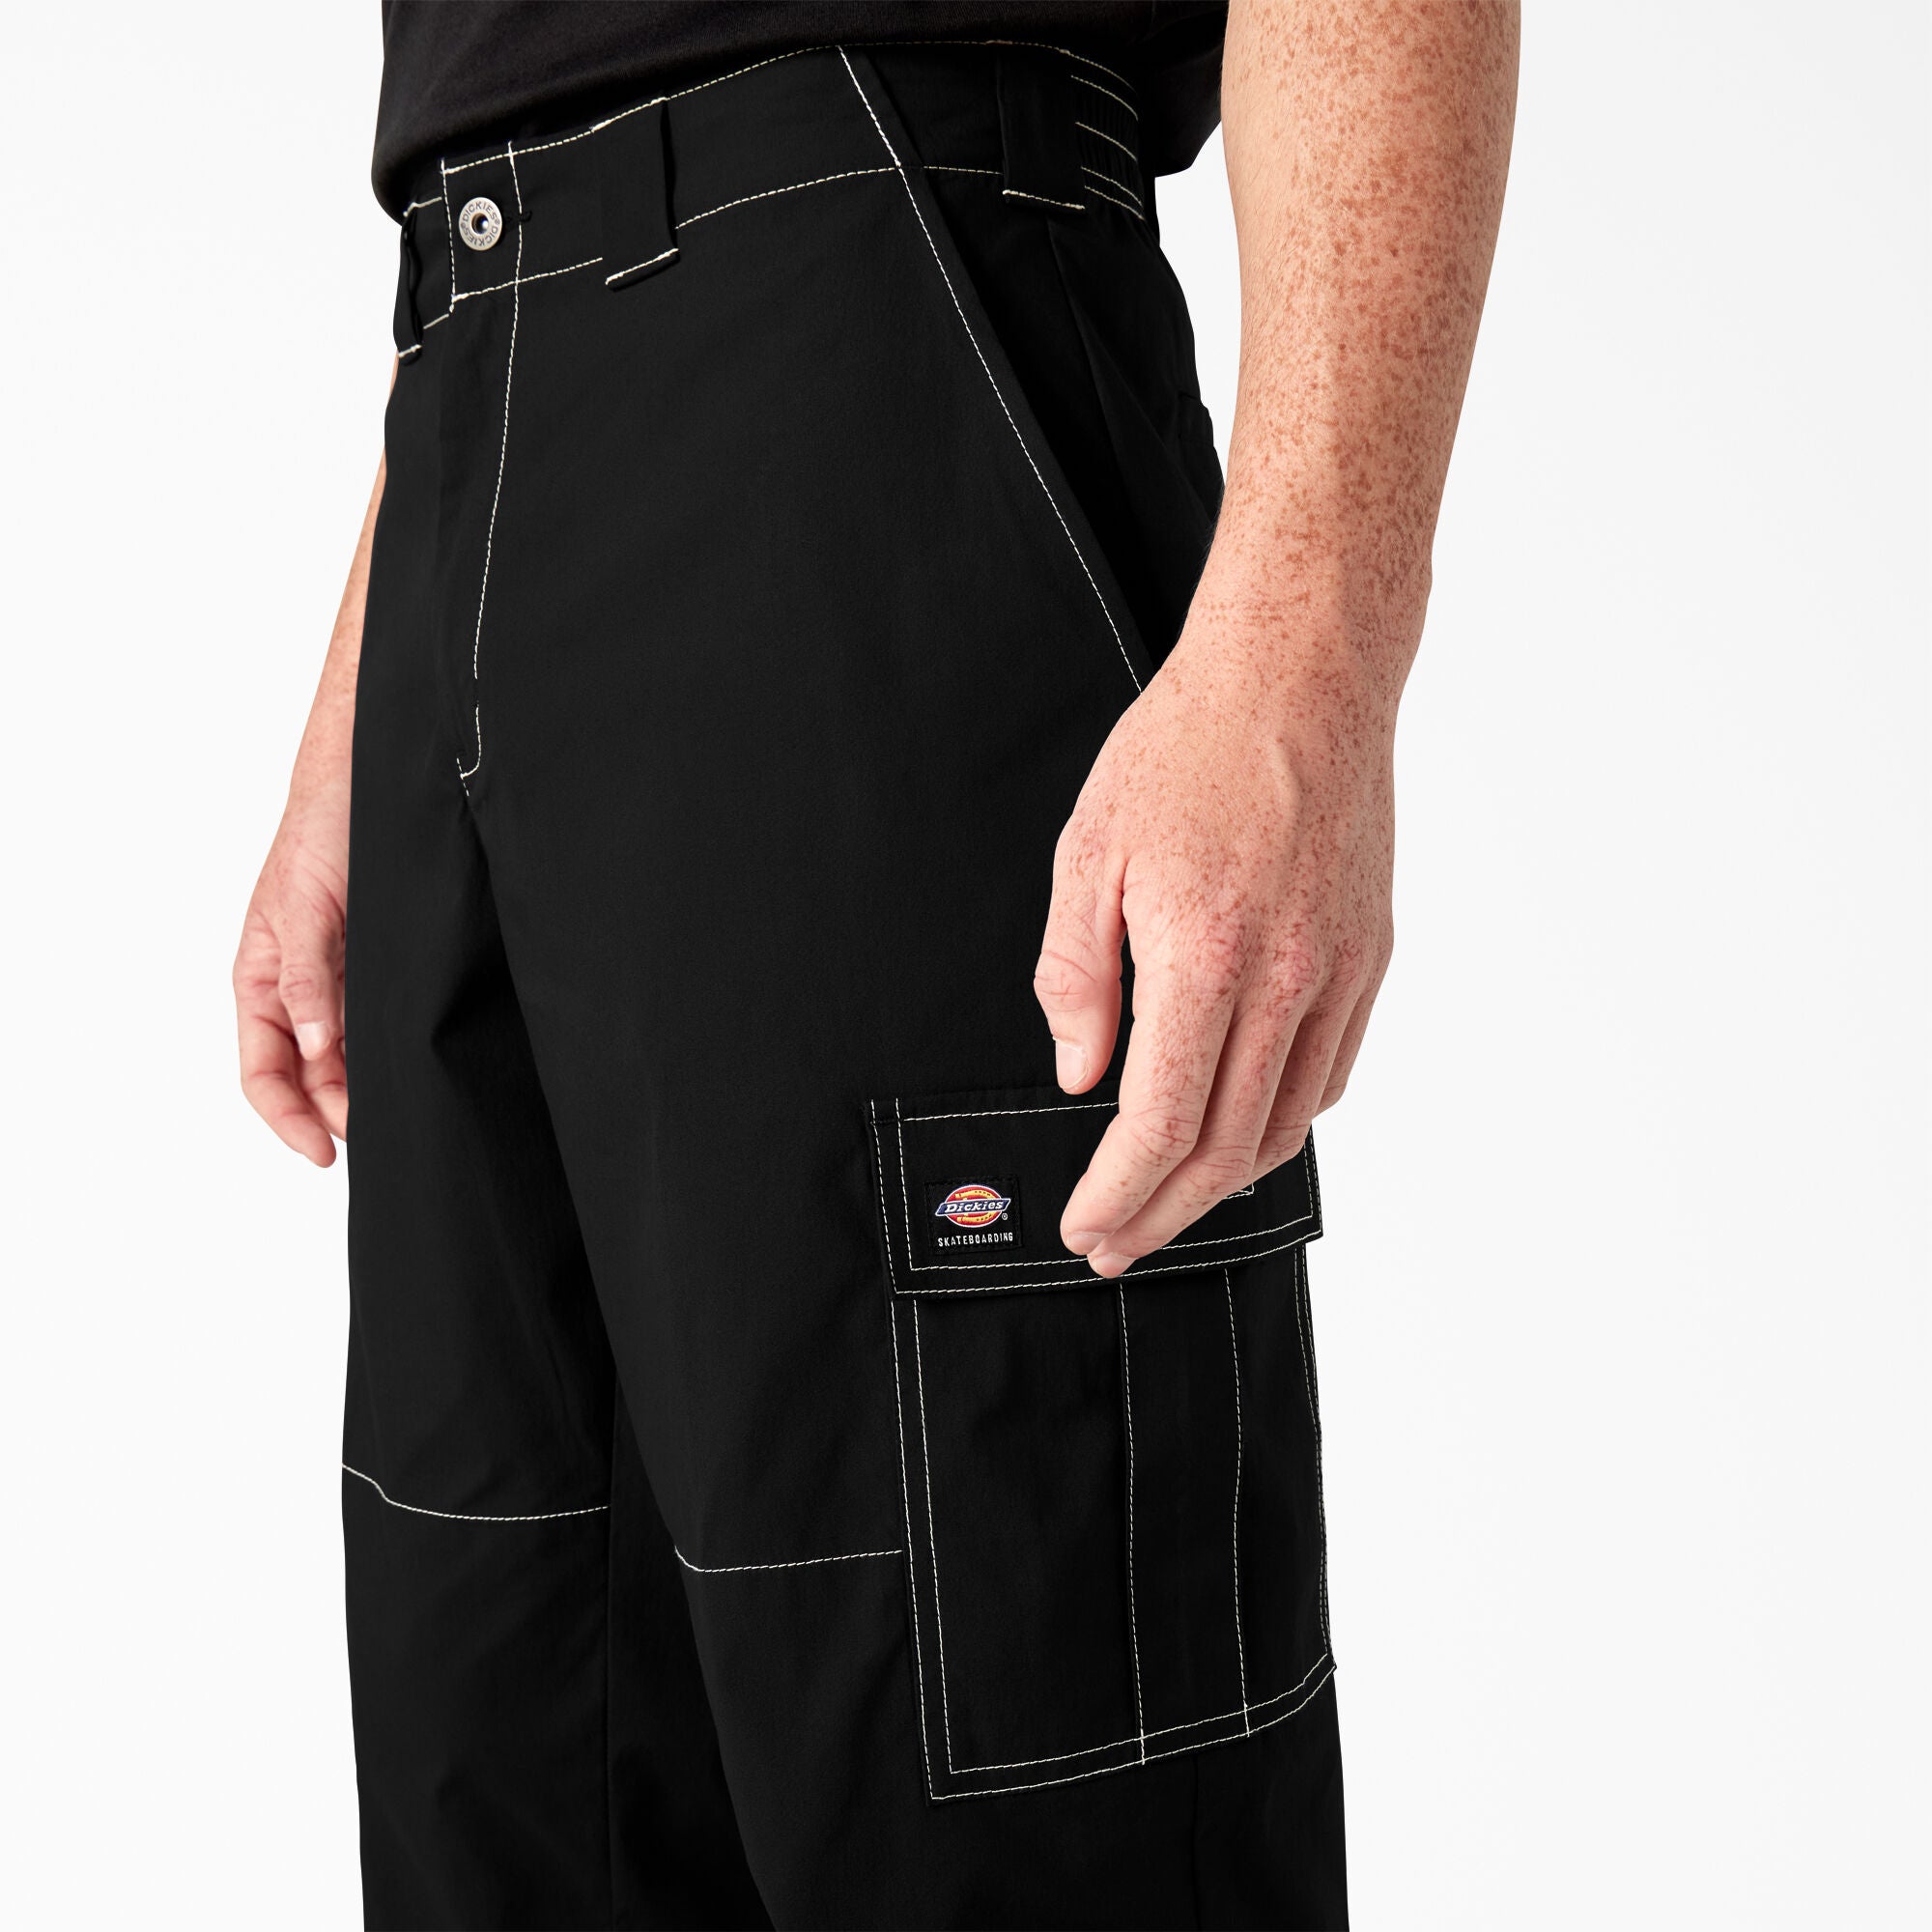 Mrat Full Length Pants Comfy Work Dress Pants Fashion Men Pocket Bandage  Resilience Leisure Time Tooling Short Pants Comfy Cropped Work Pants -  Walmart.com